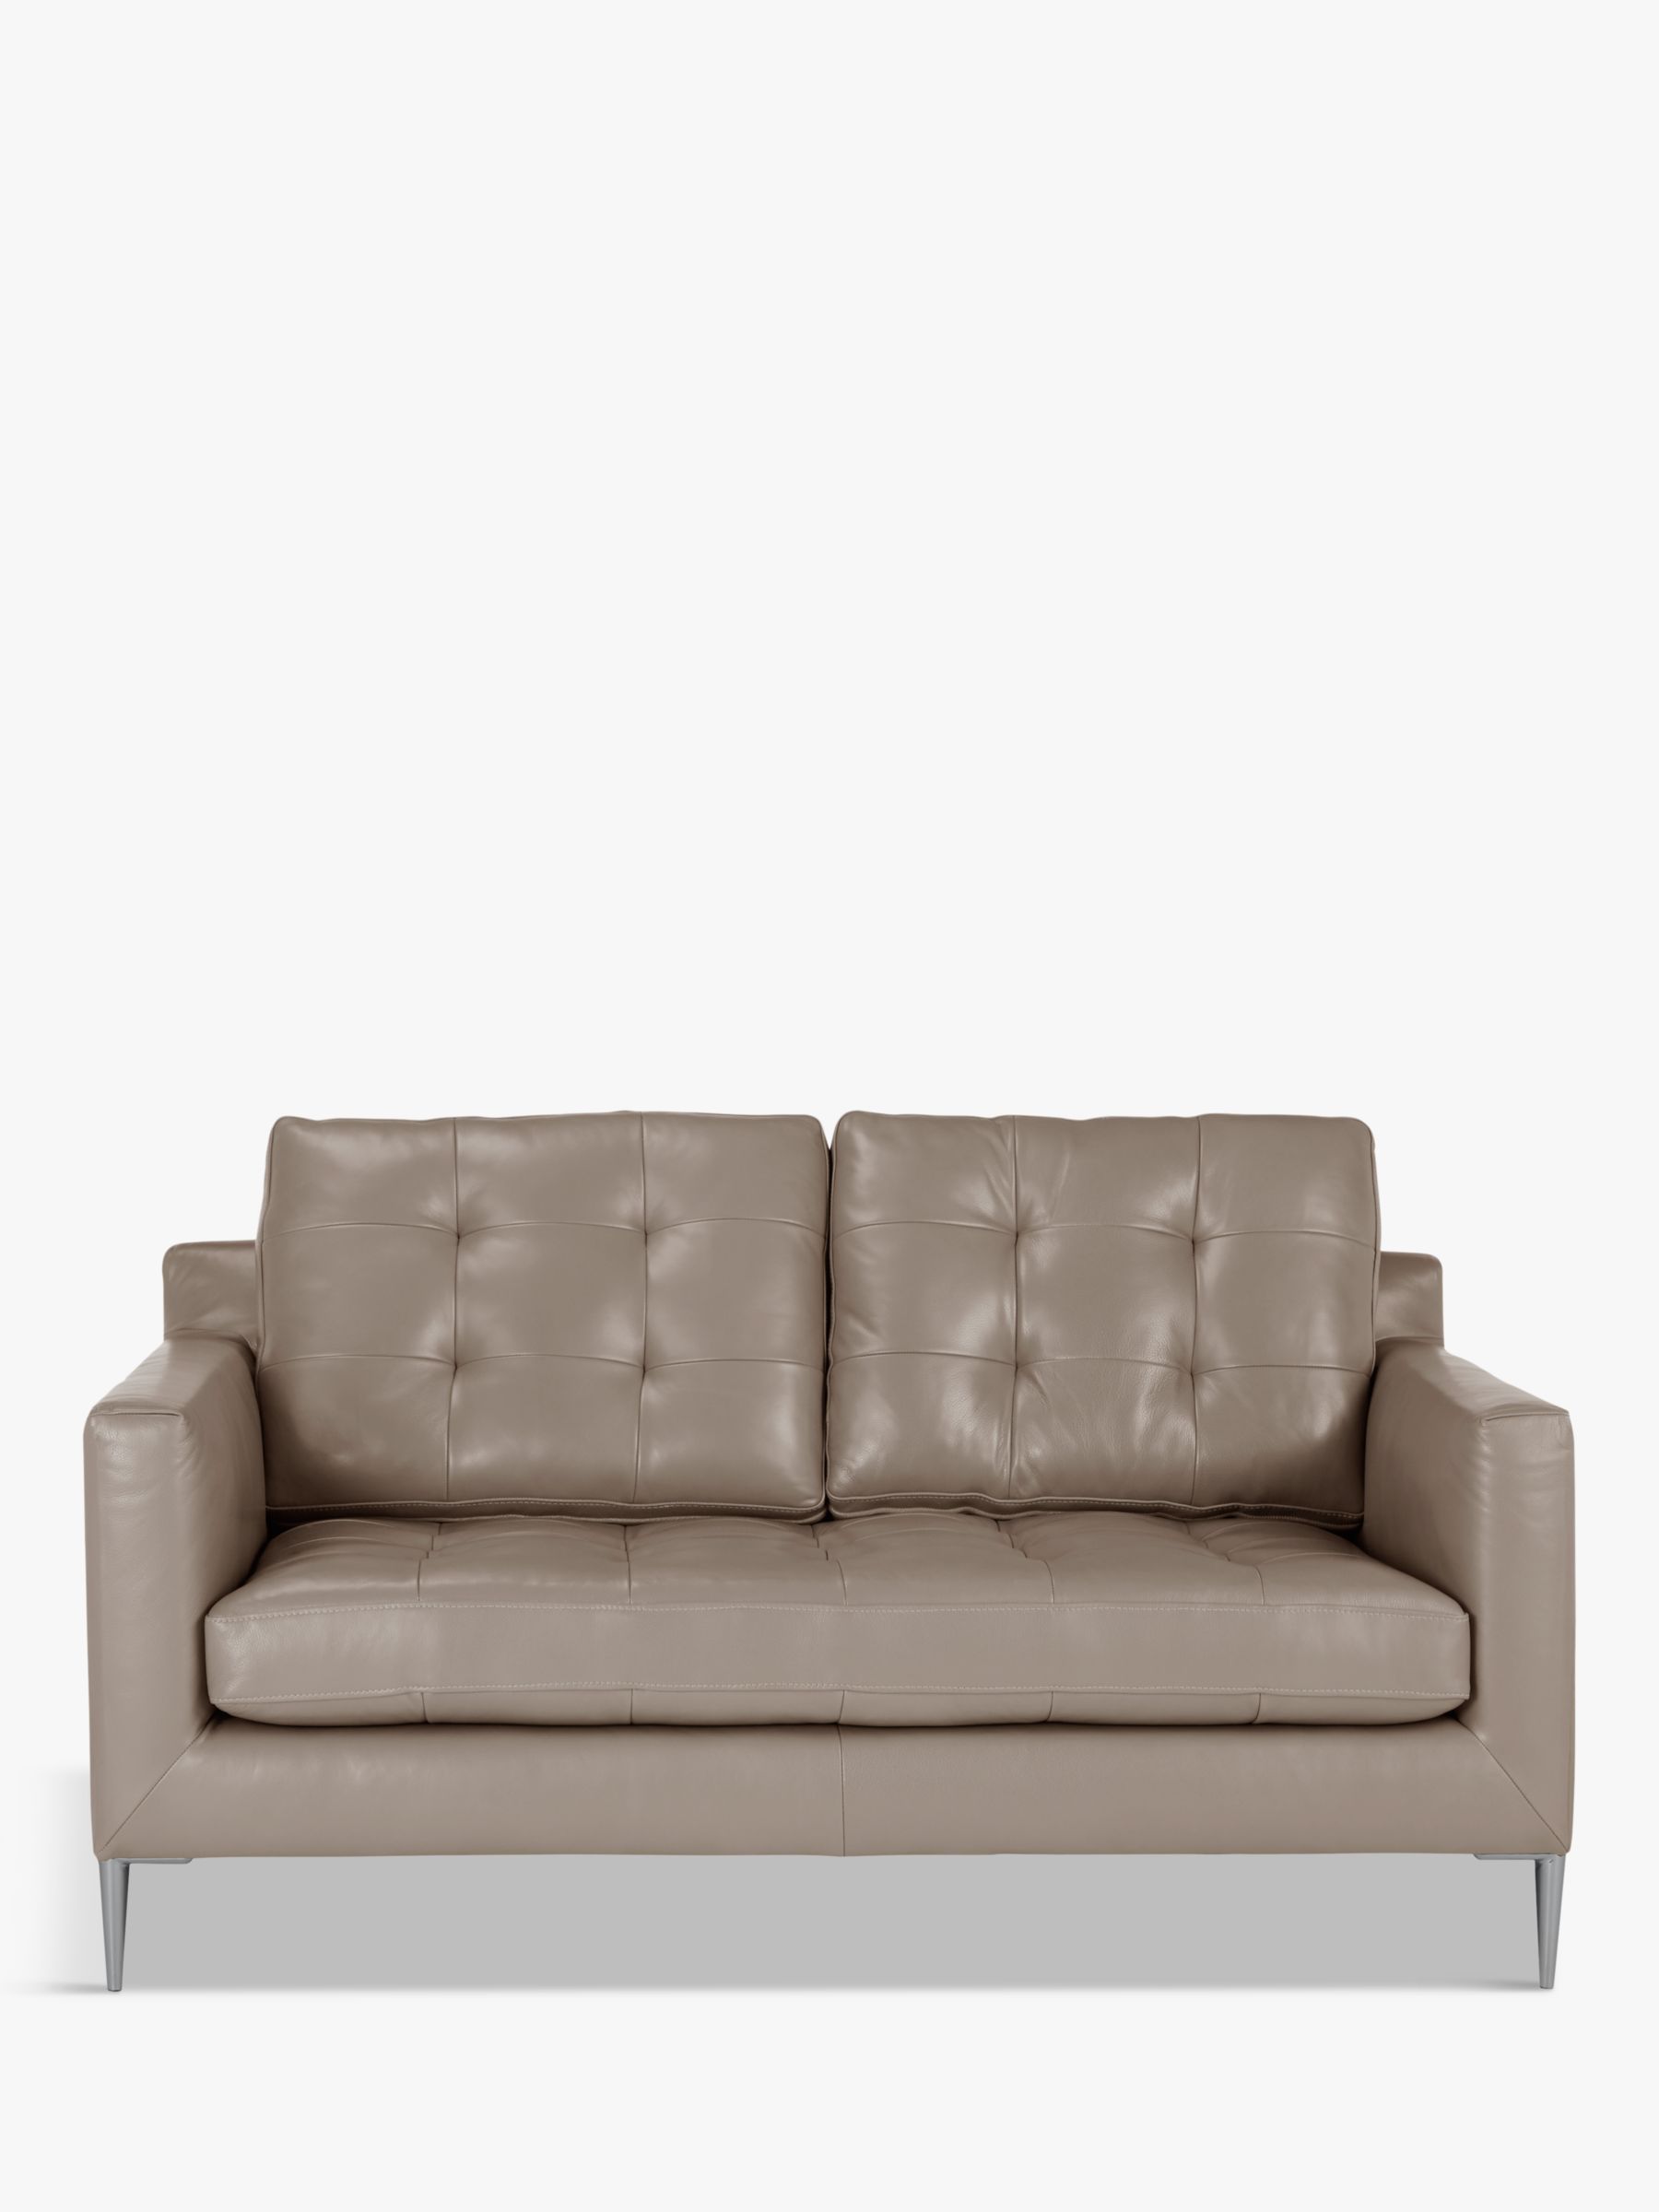 John Lewis Draper Medium 2 Seater Leather Sofa, Metal Leg